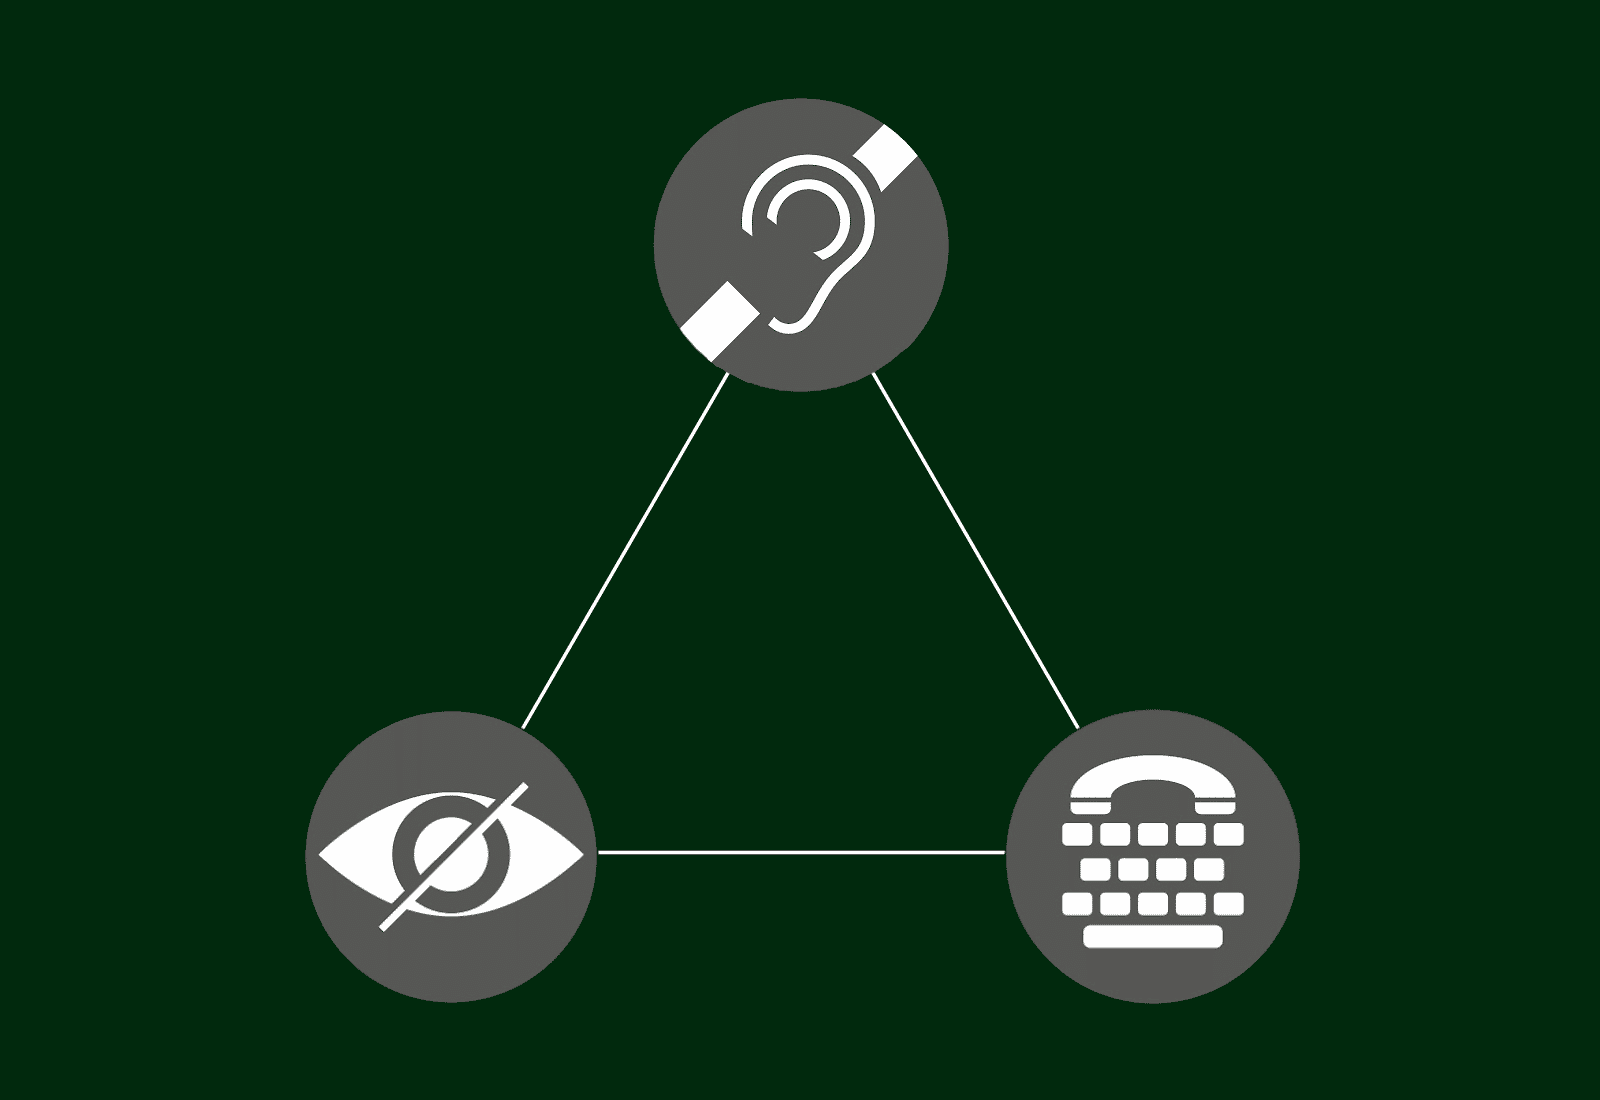 icons for vision impairment, hearing impairment and hearing impairment arranged in a triangle